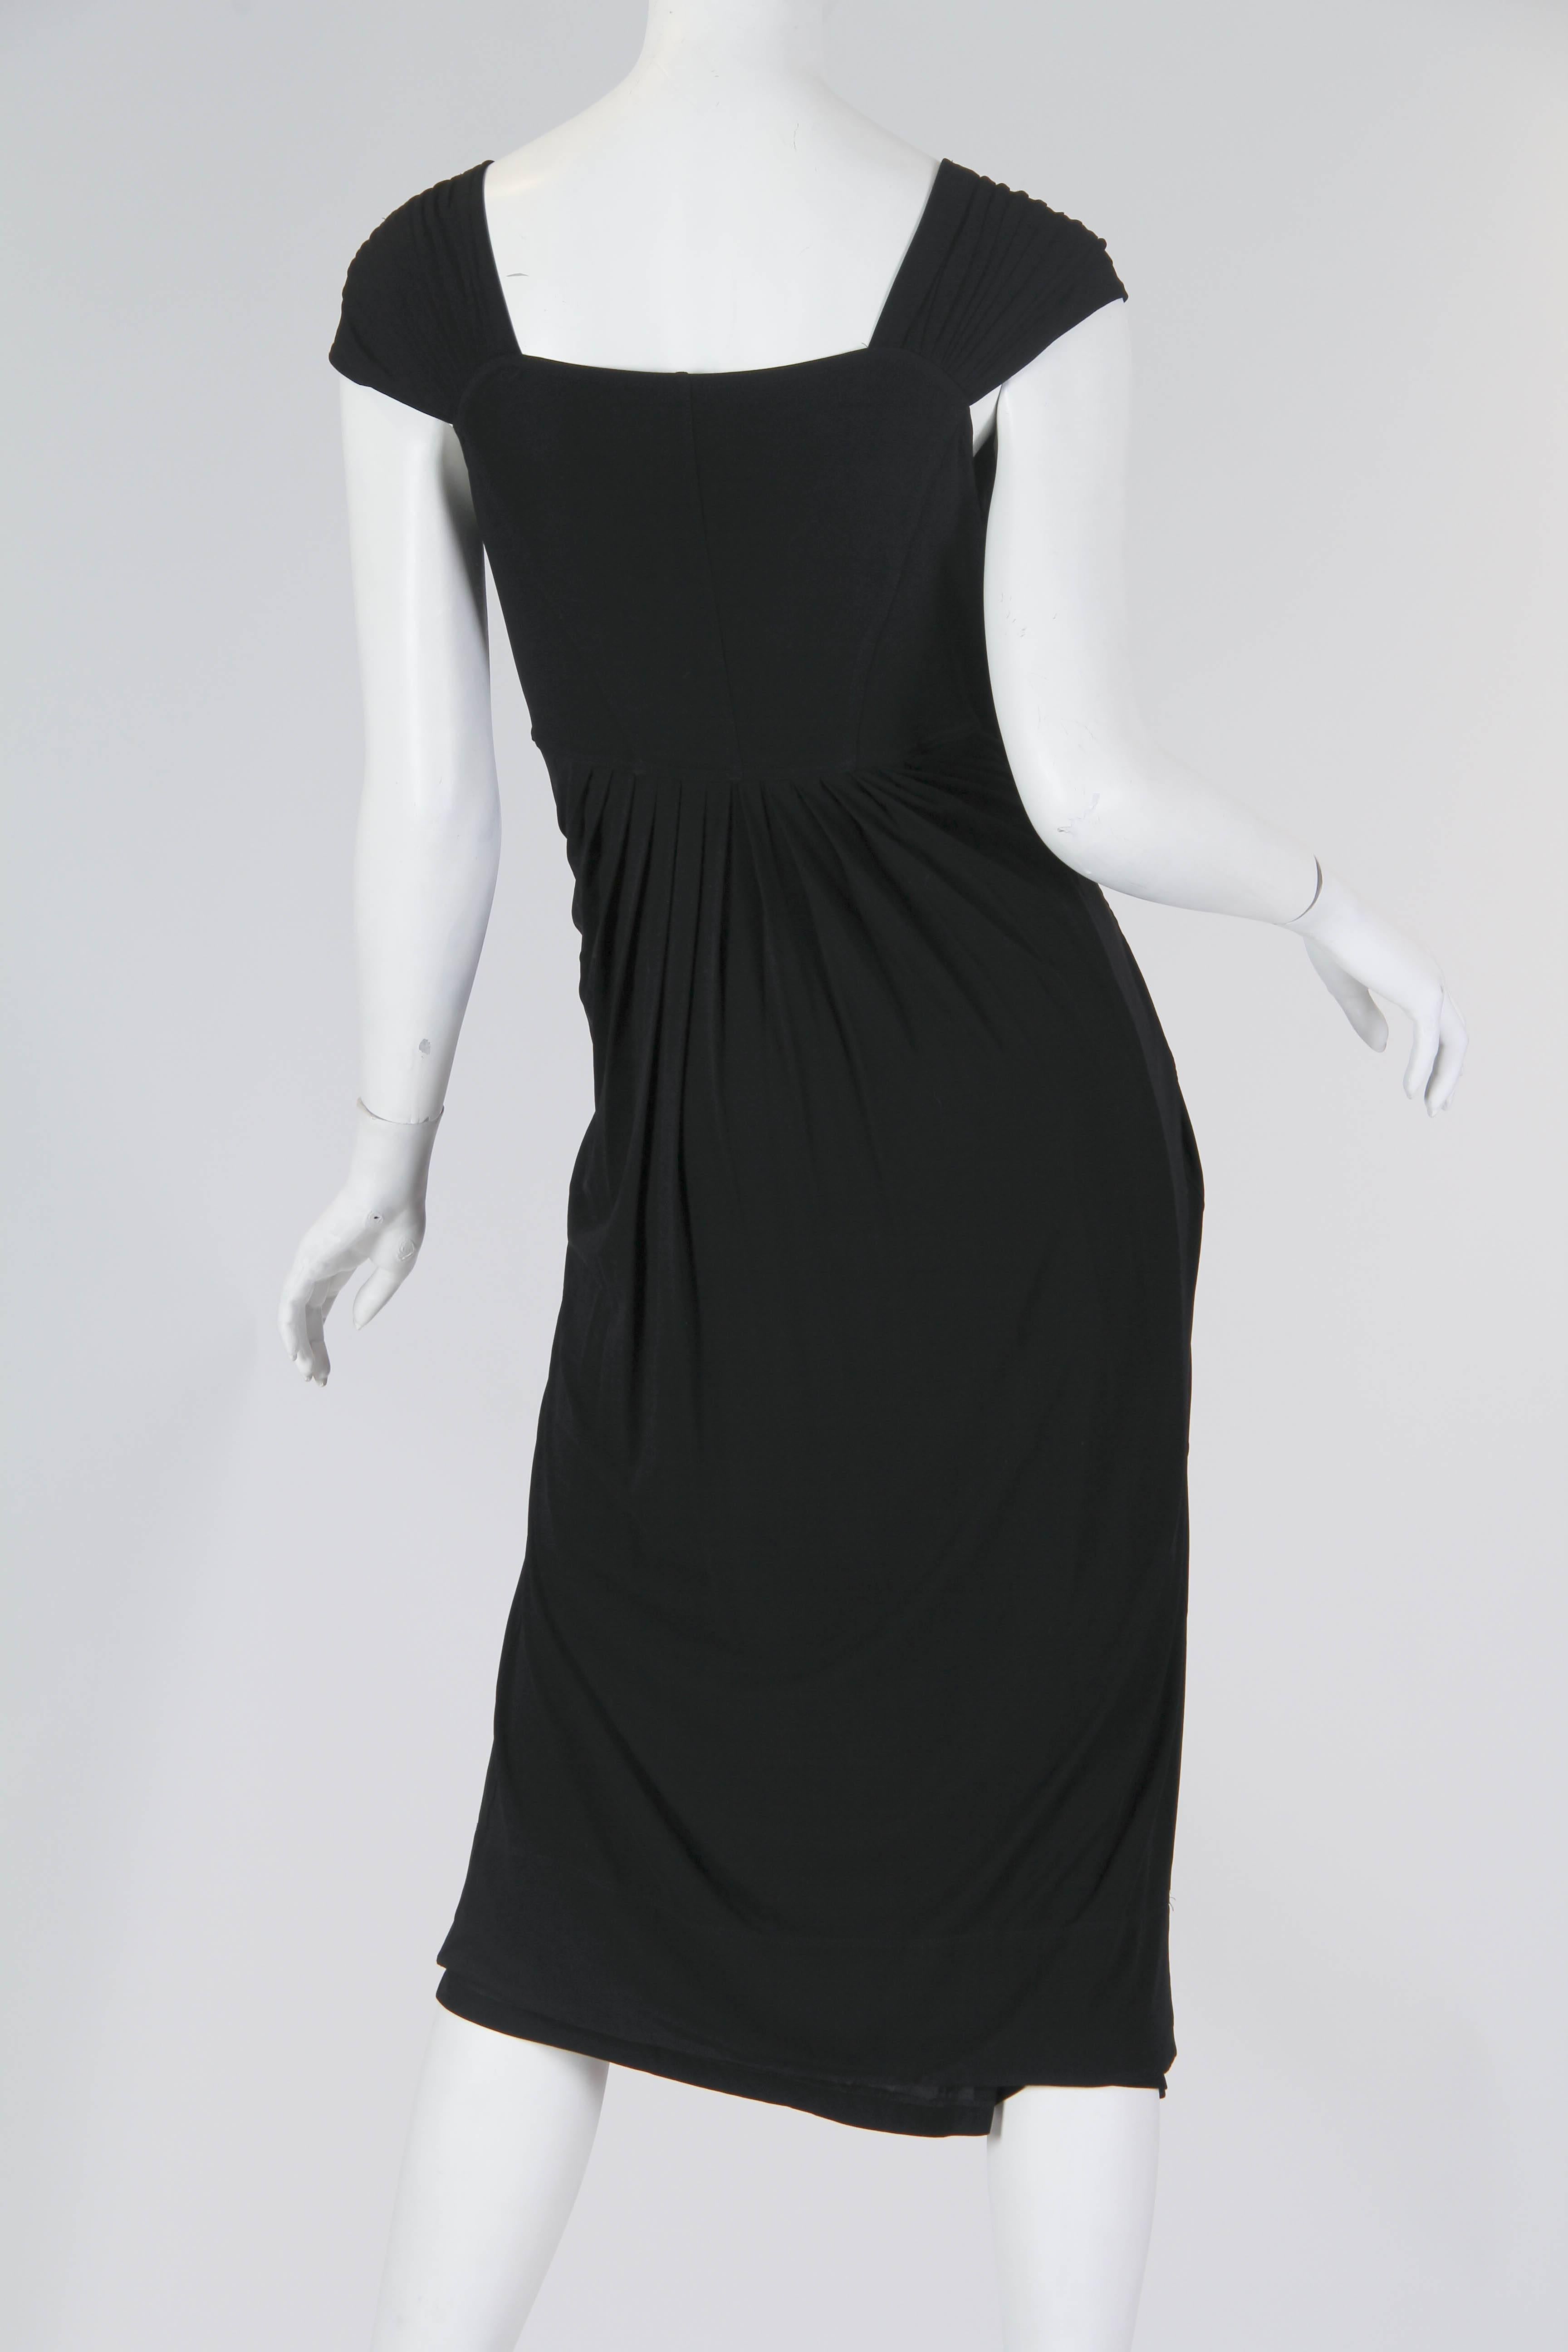 Donna Karan Draped Jersey Dress 2